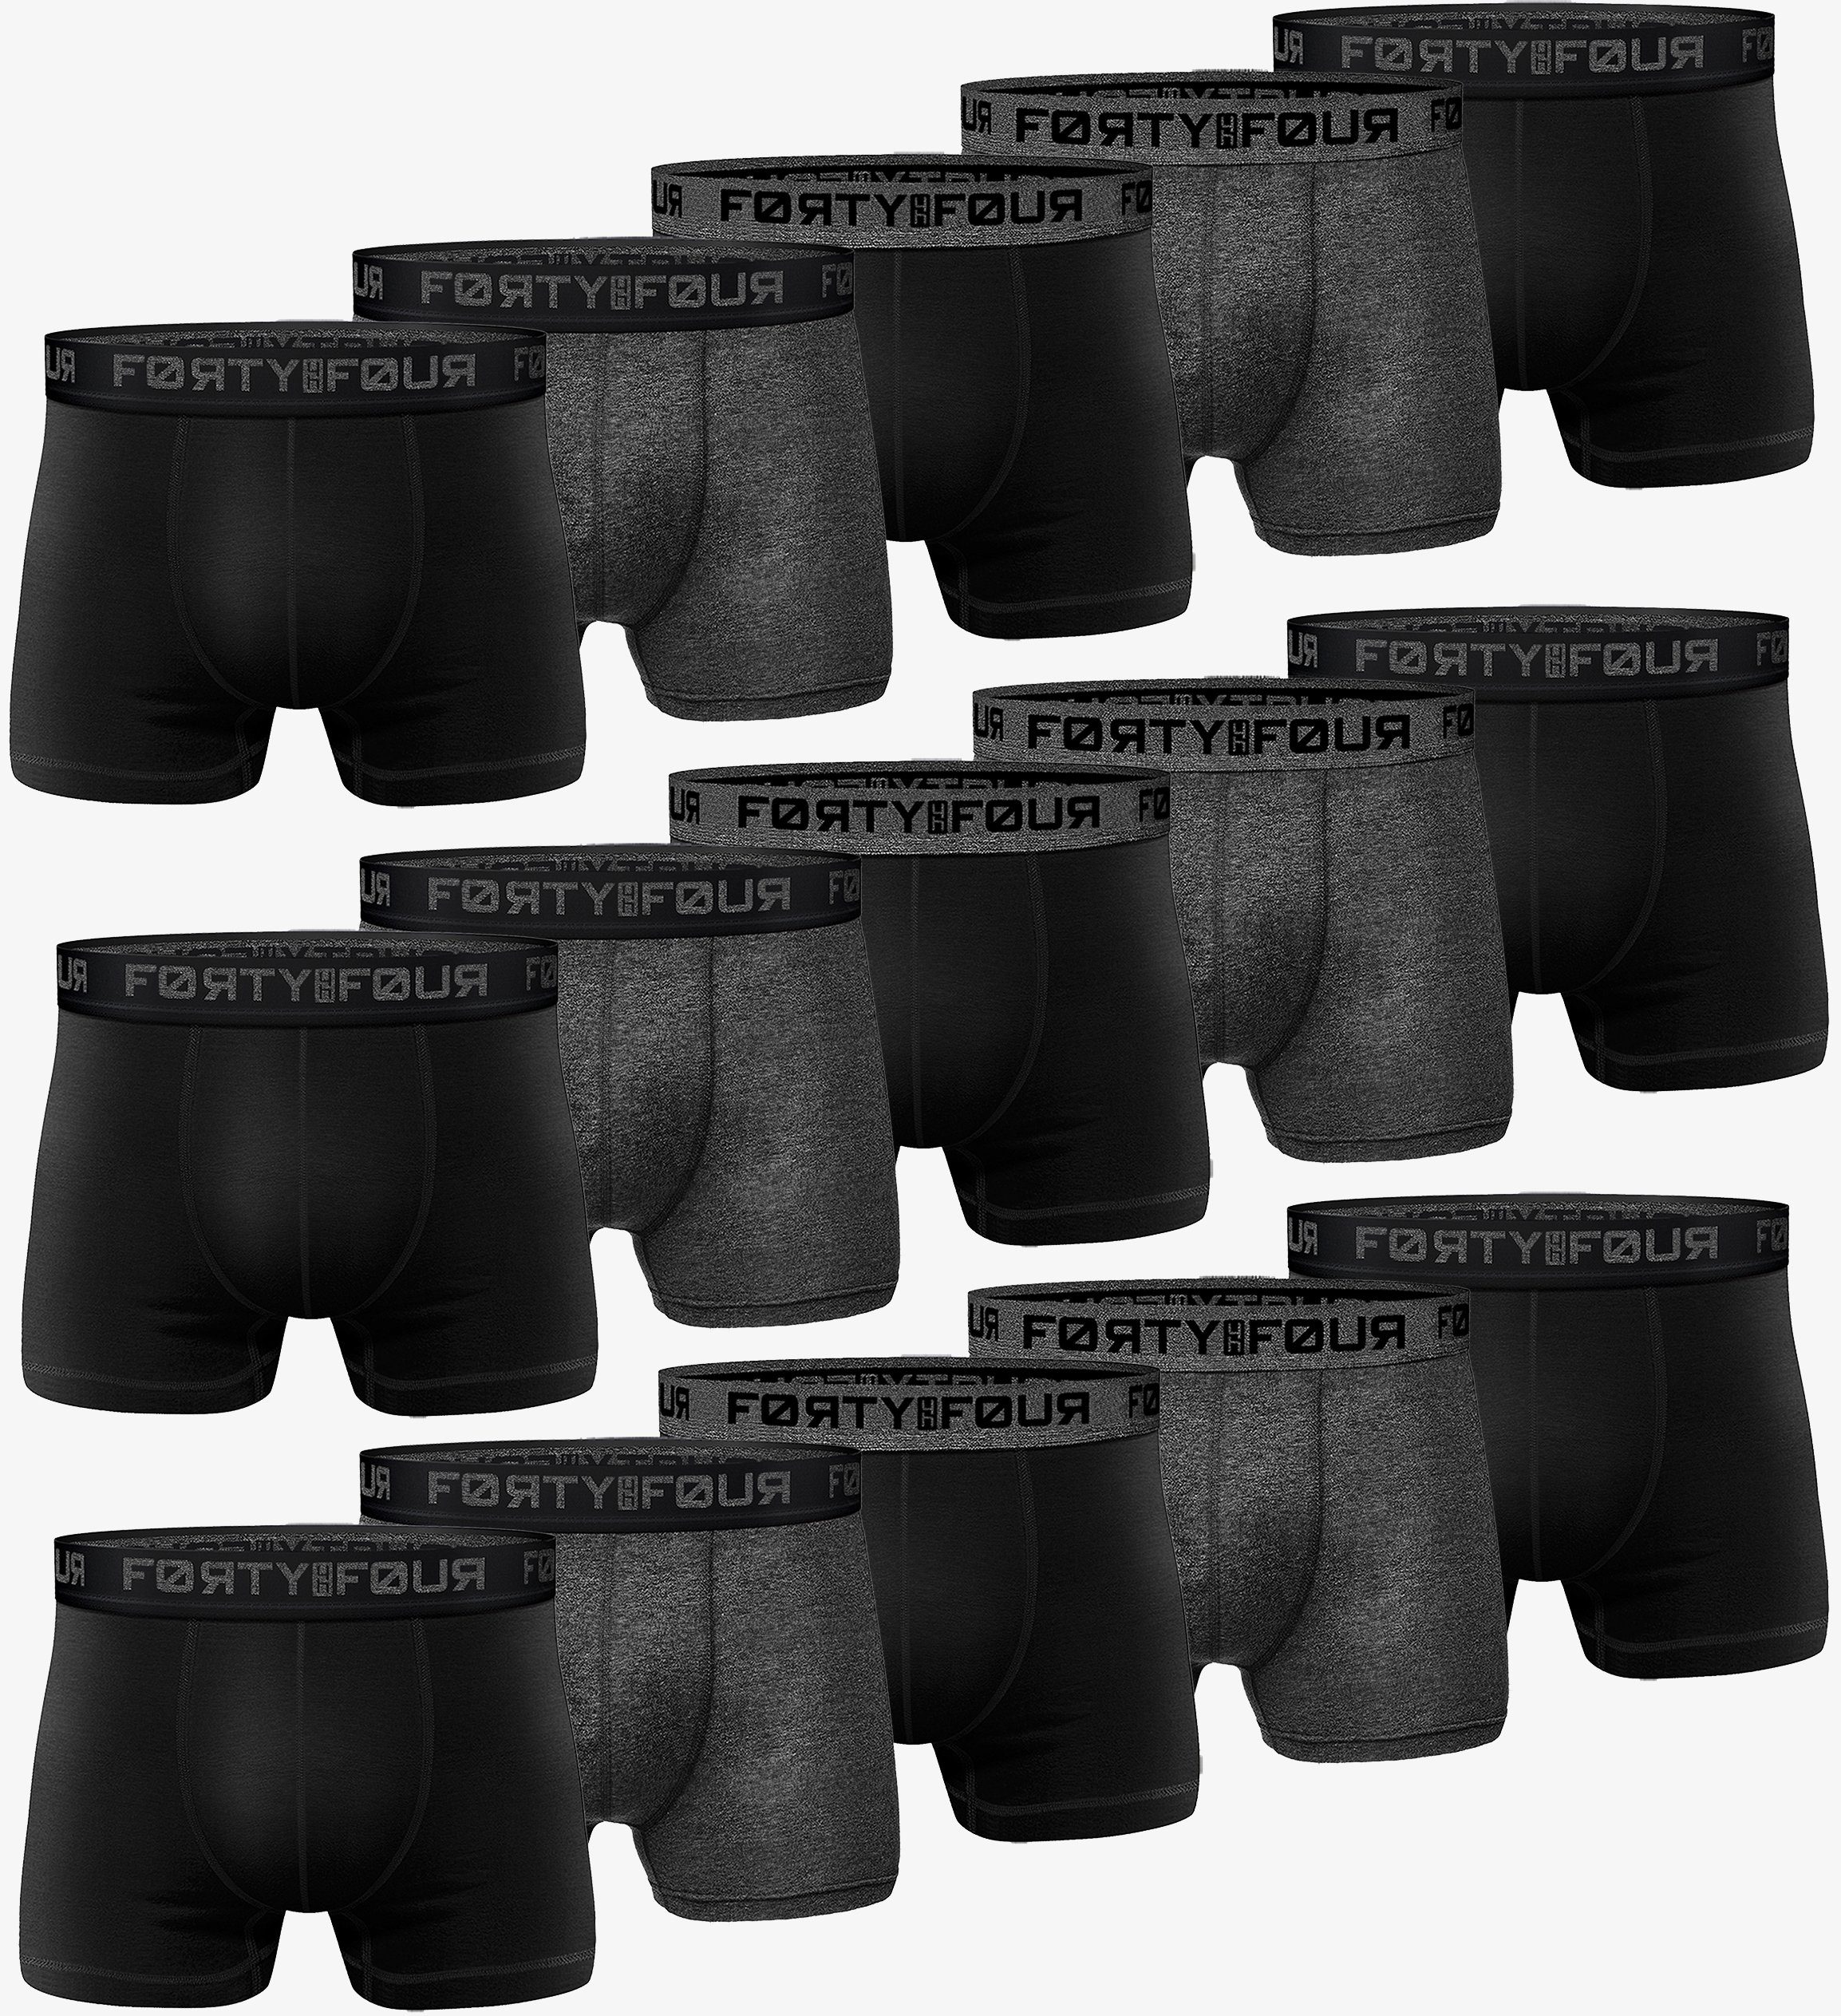 FortyFour Боксерские мужские трусы, боксерки Herren Männer Unterhosen Baumwolle Premium Qualität perfekte Passform (15er Pack, 15er Pack)